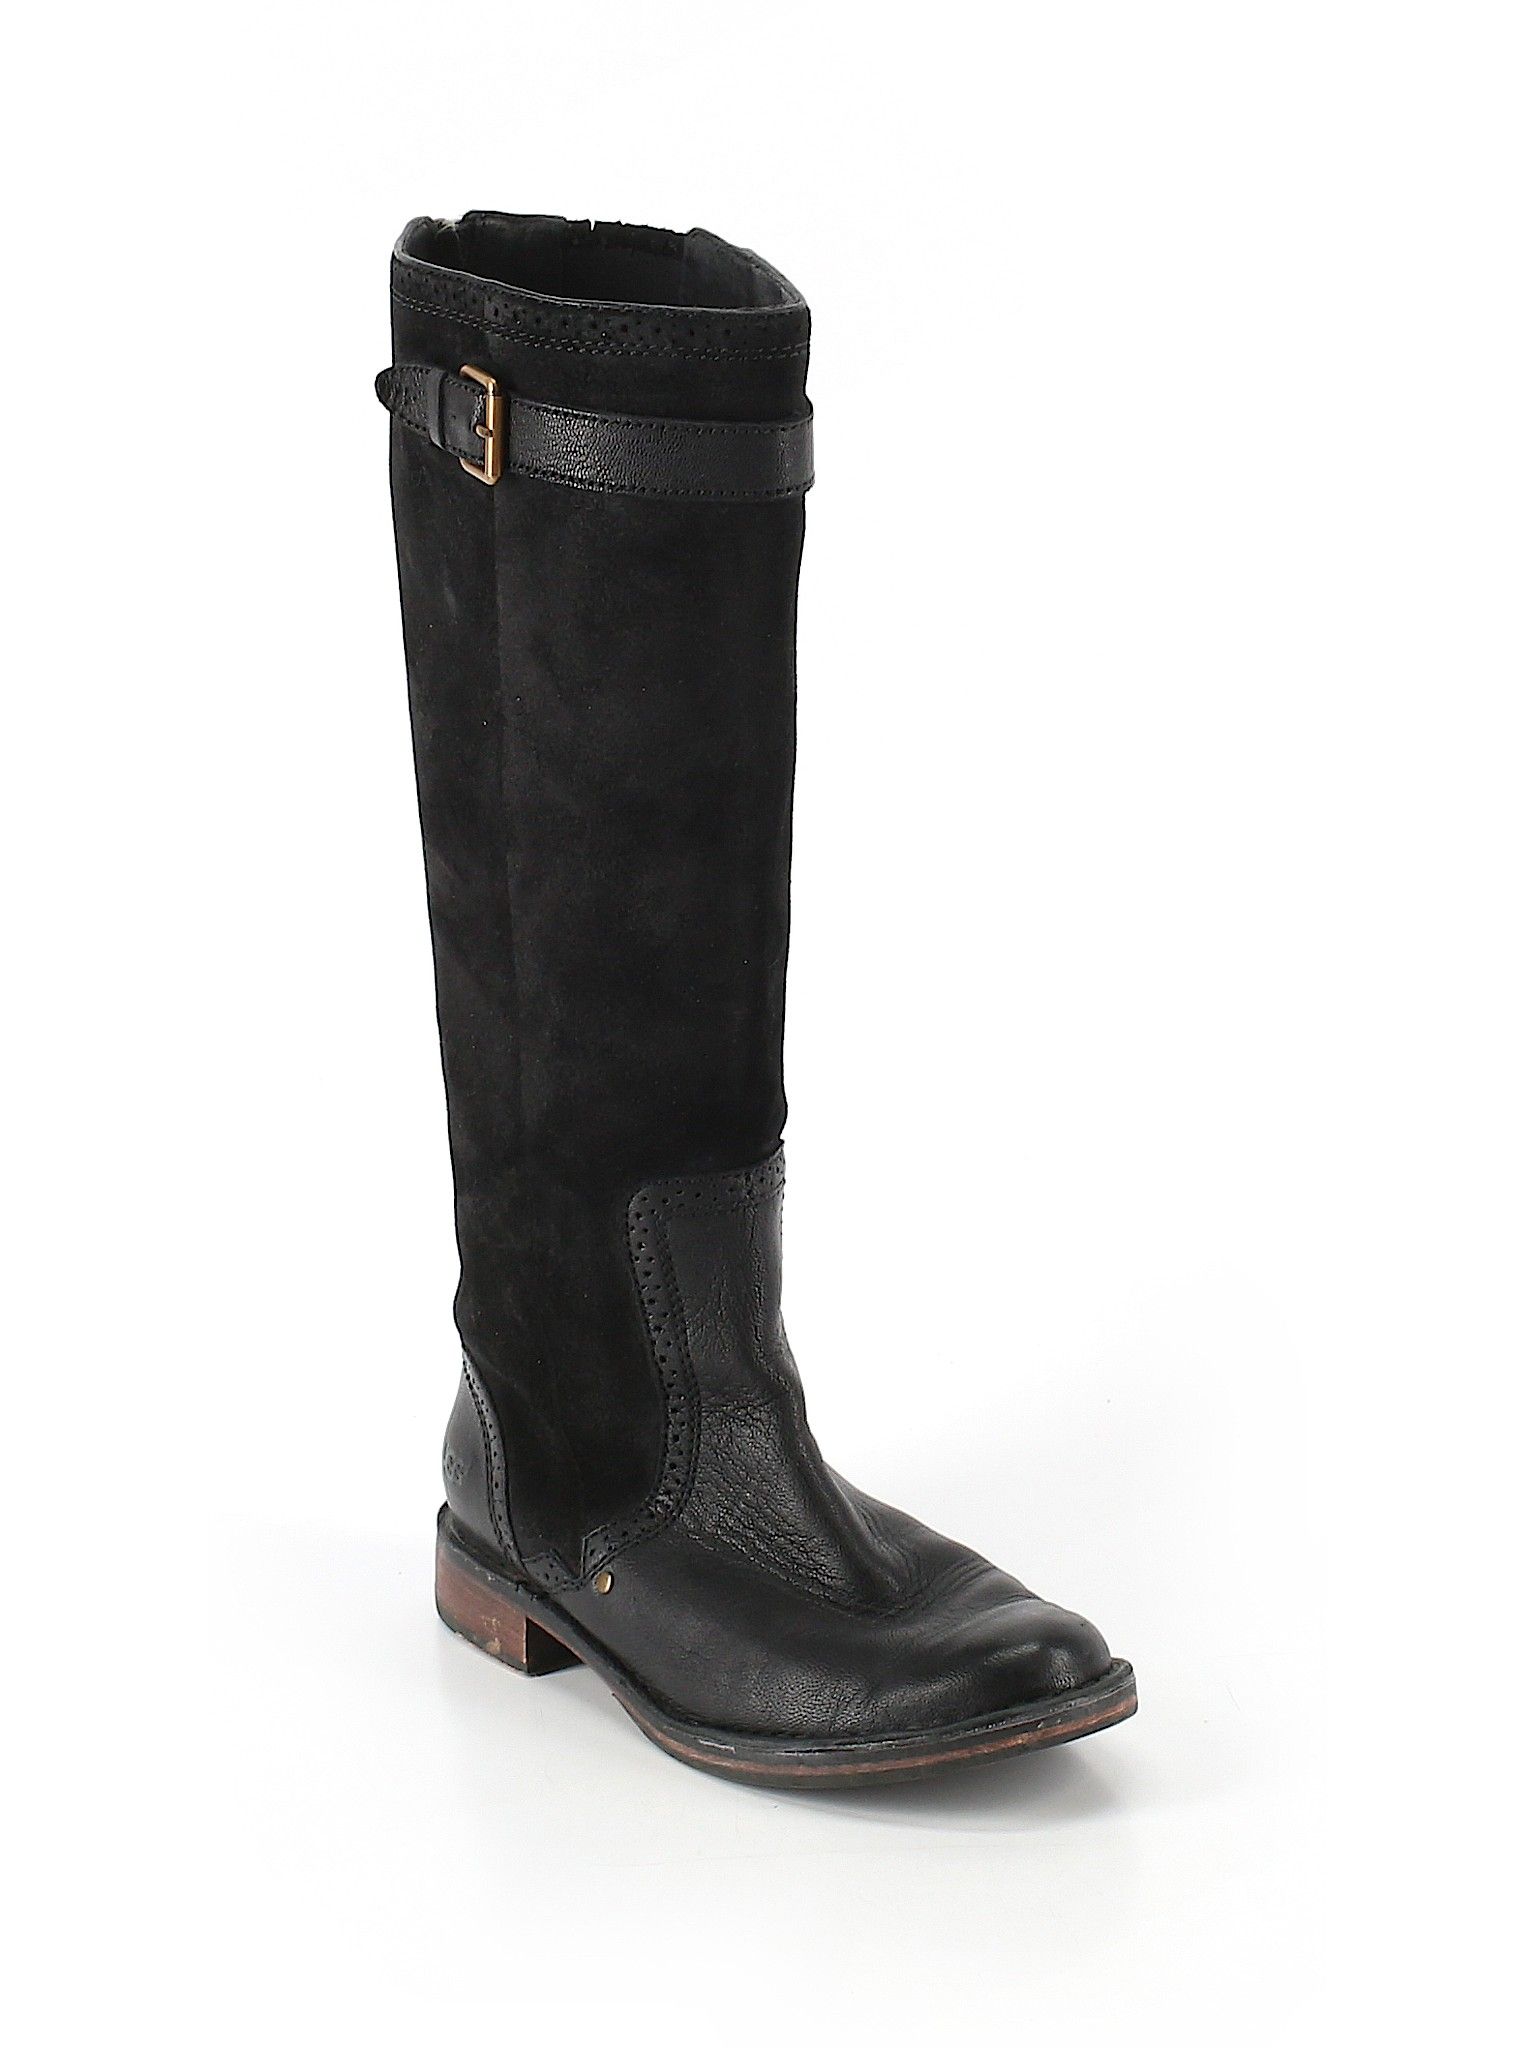 Ugg Australia Boots Size 7: Black Women's Clothing - 43587500 | thredUP